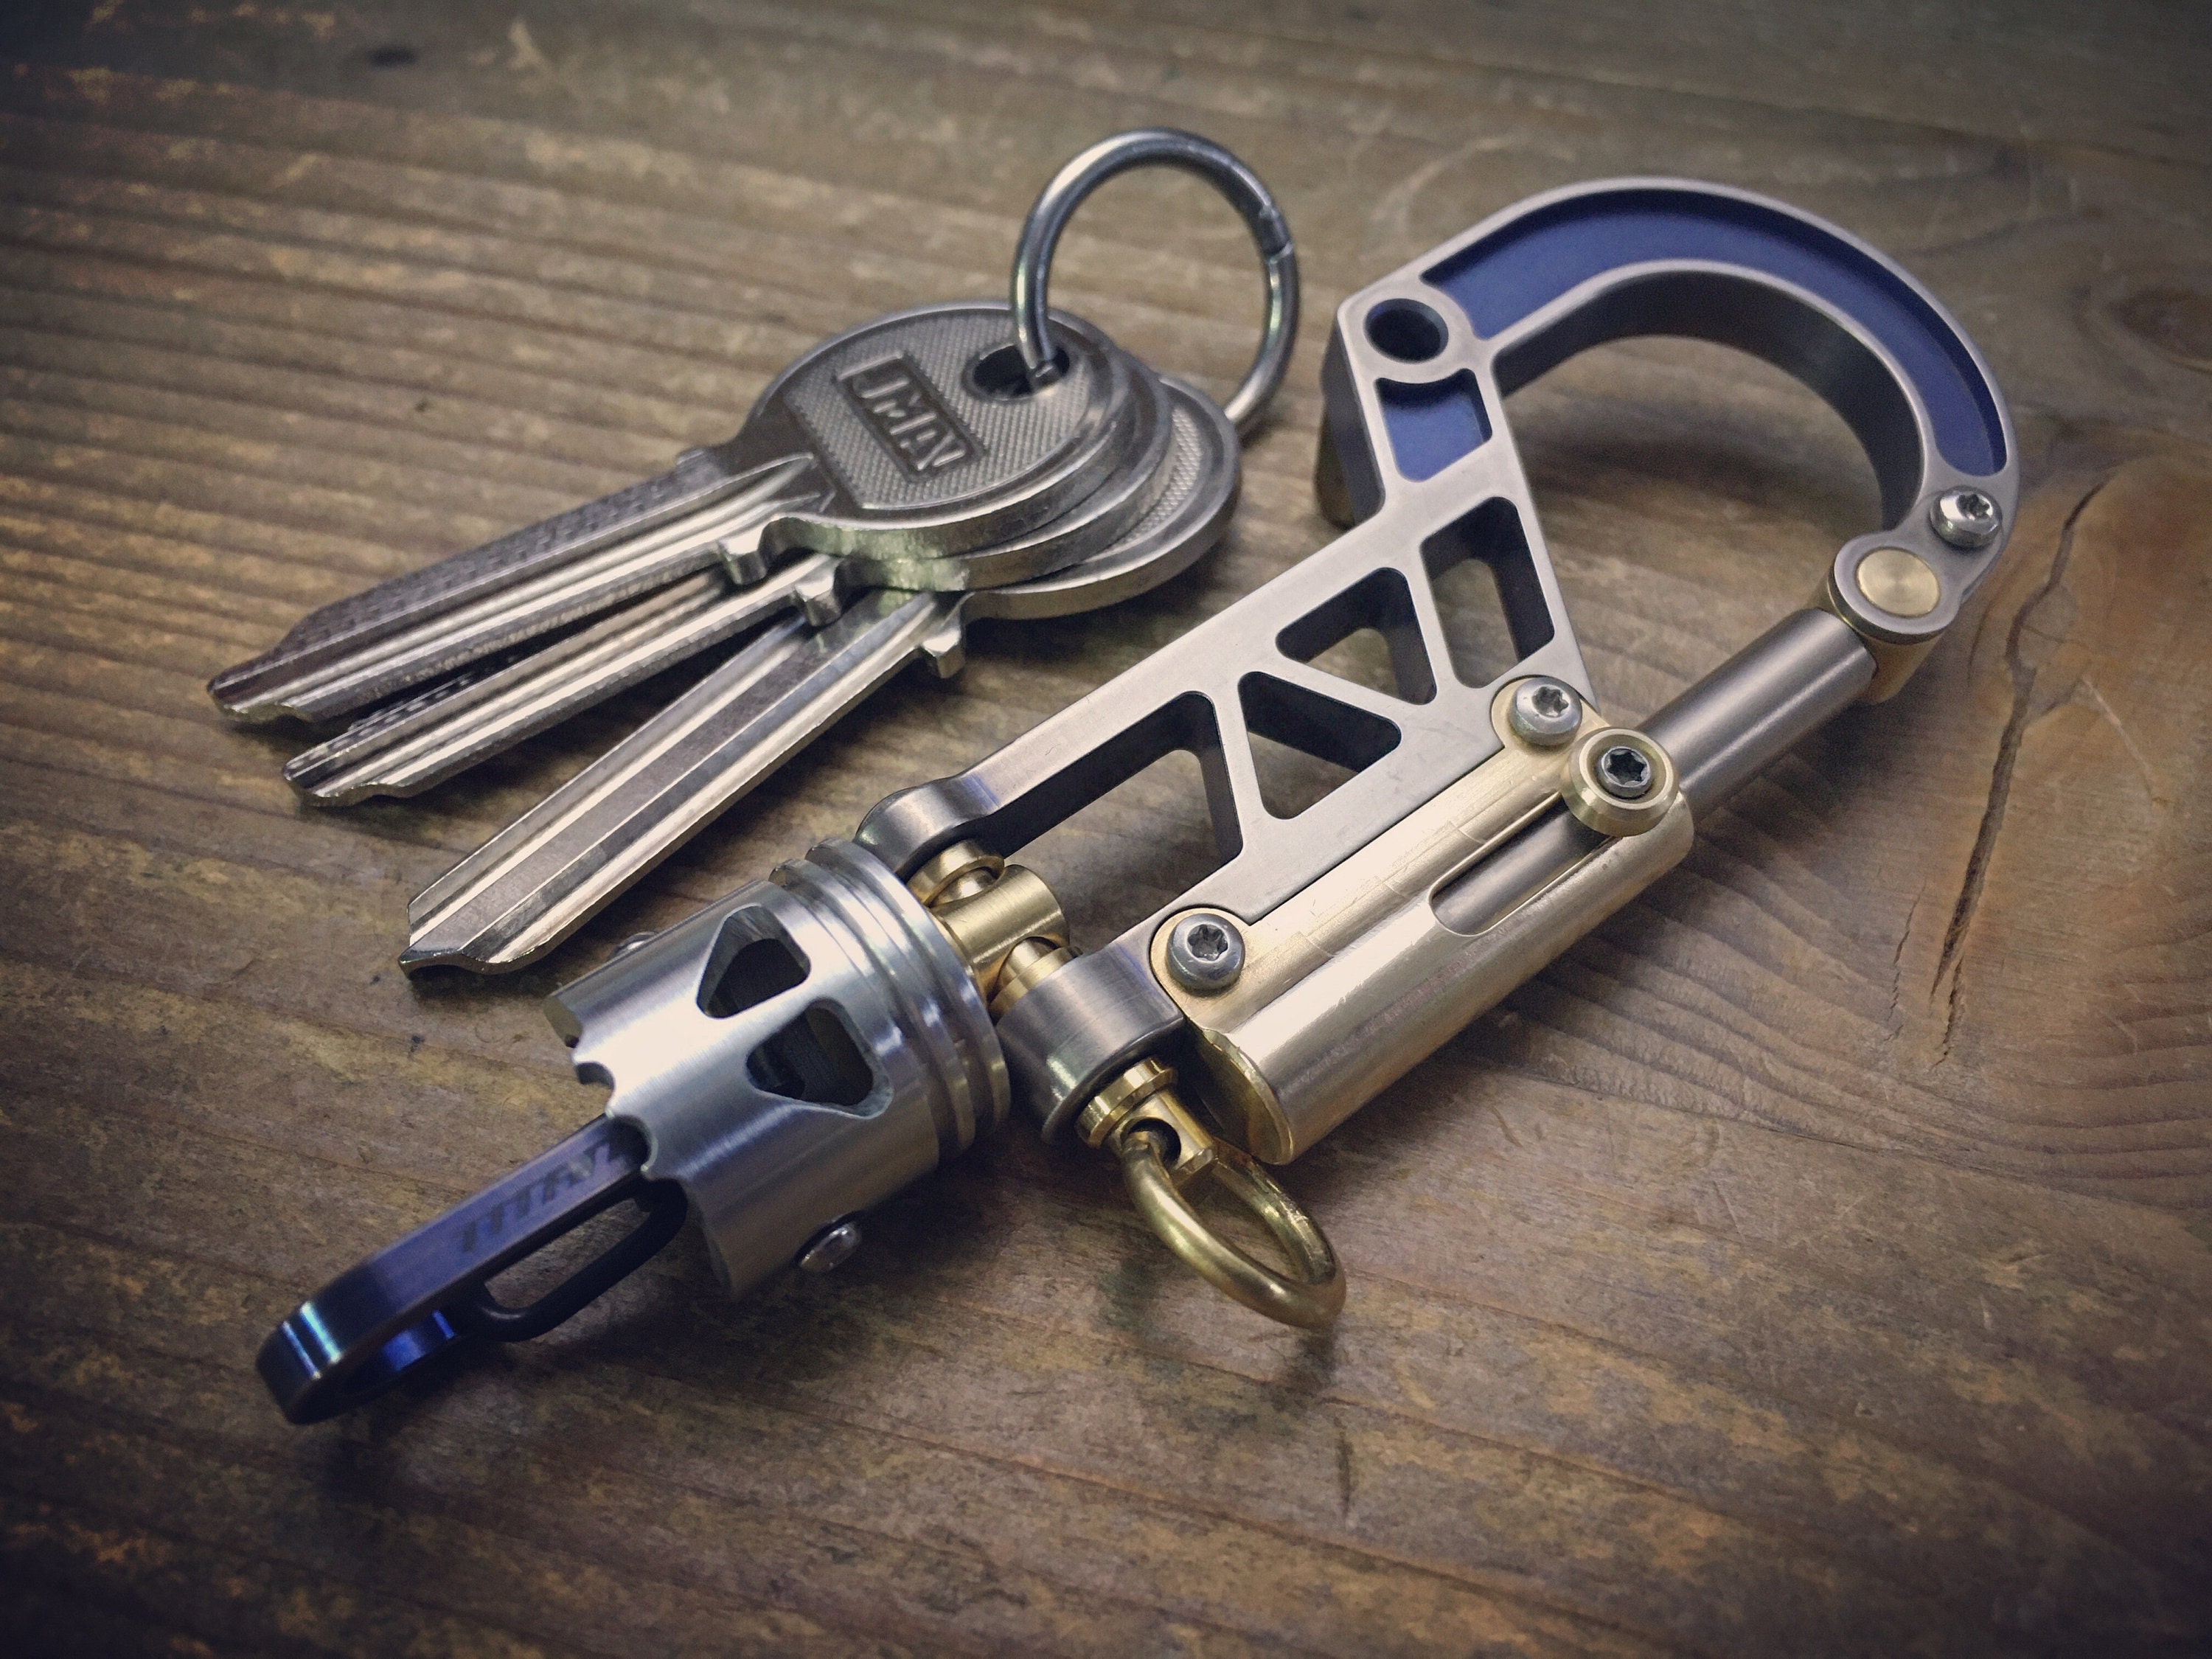 Hamans Titanium Carabiner Keychain Tightens Screws and Pops Beer